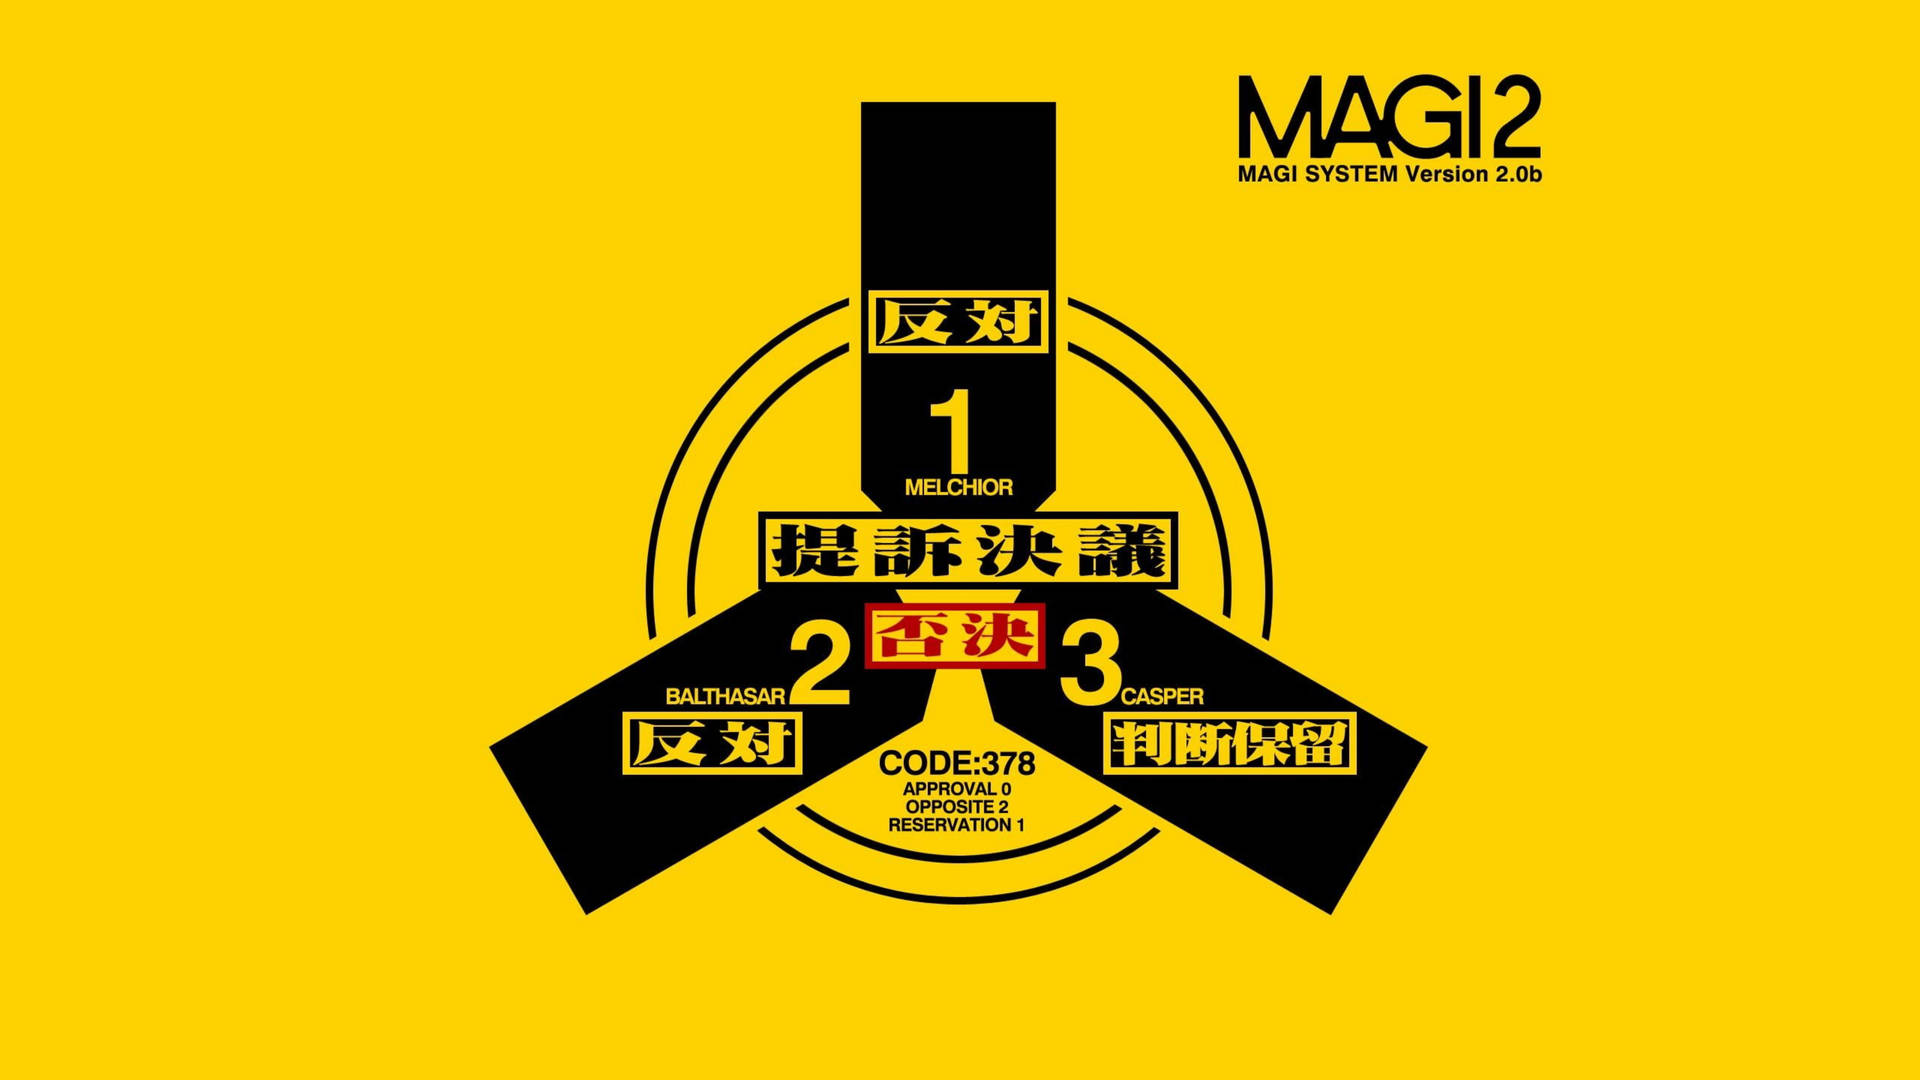 Evangelion4k Magi System Logo - Evangelion 4k Magi System Logotyp Wallpaper